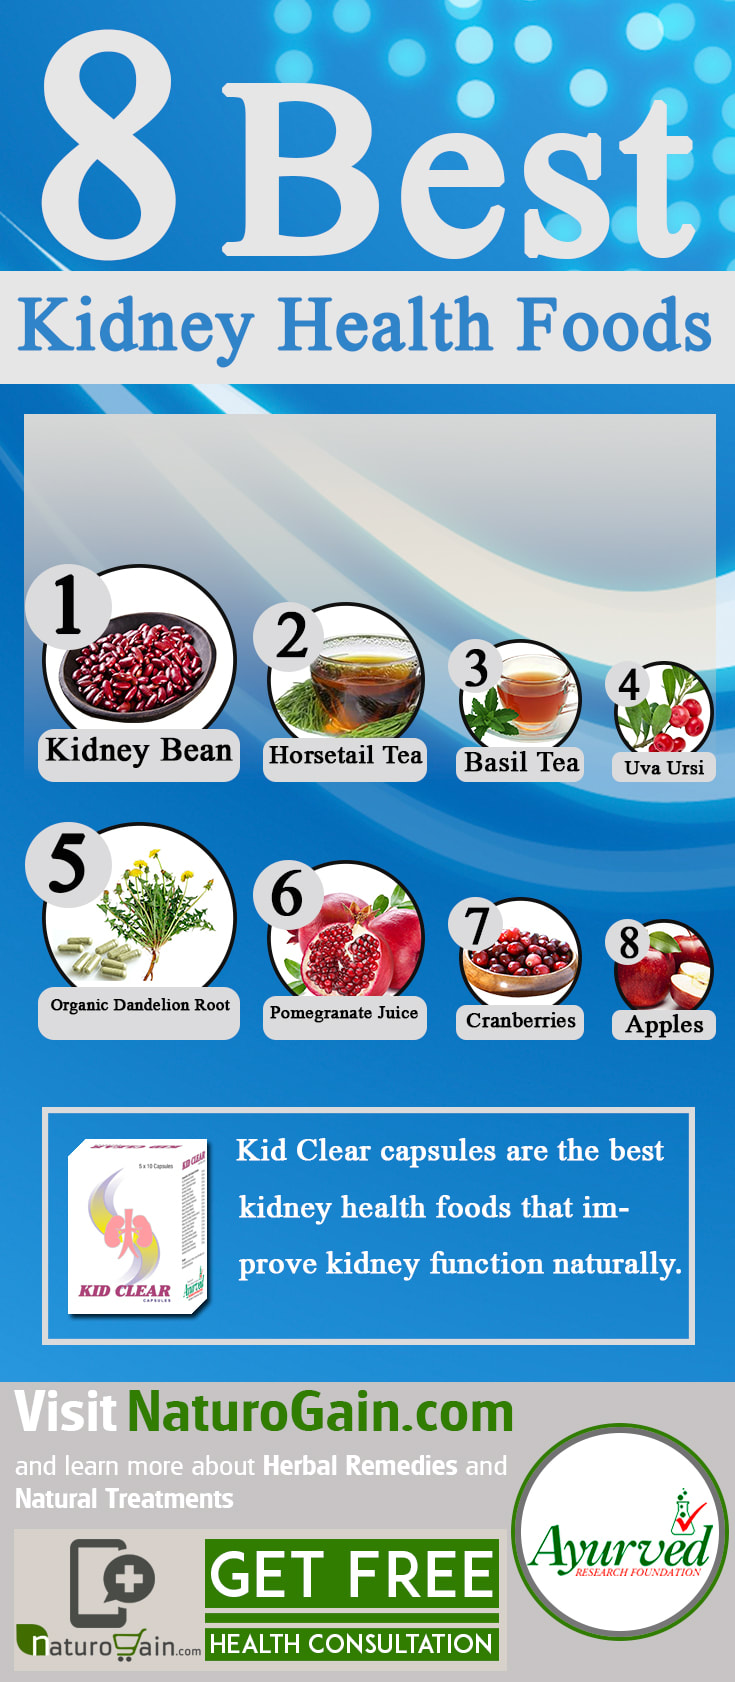 improve kidney health